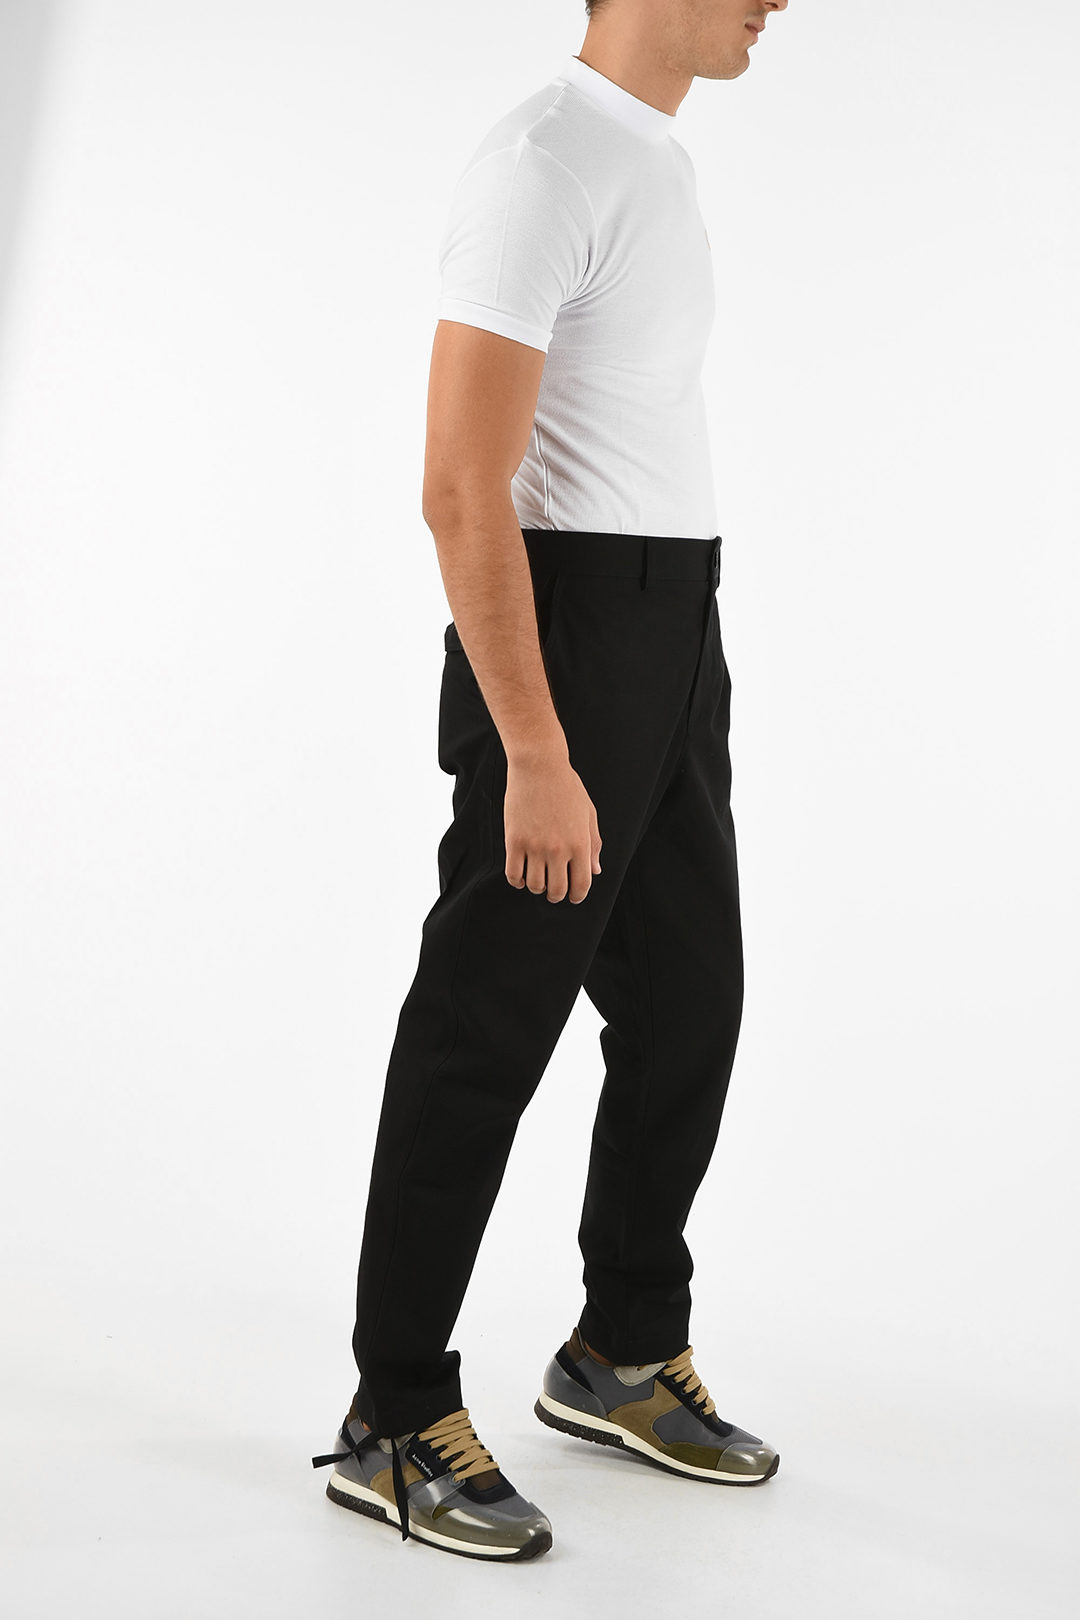 high waist pants for male